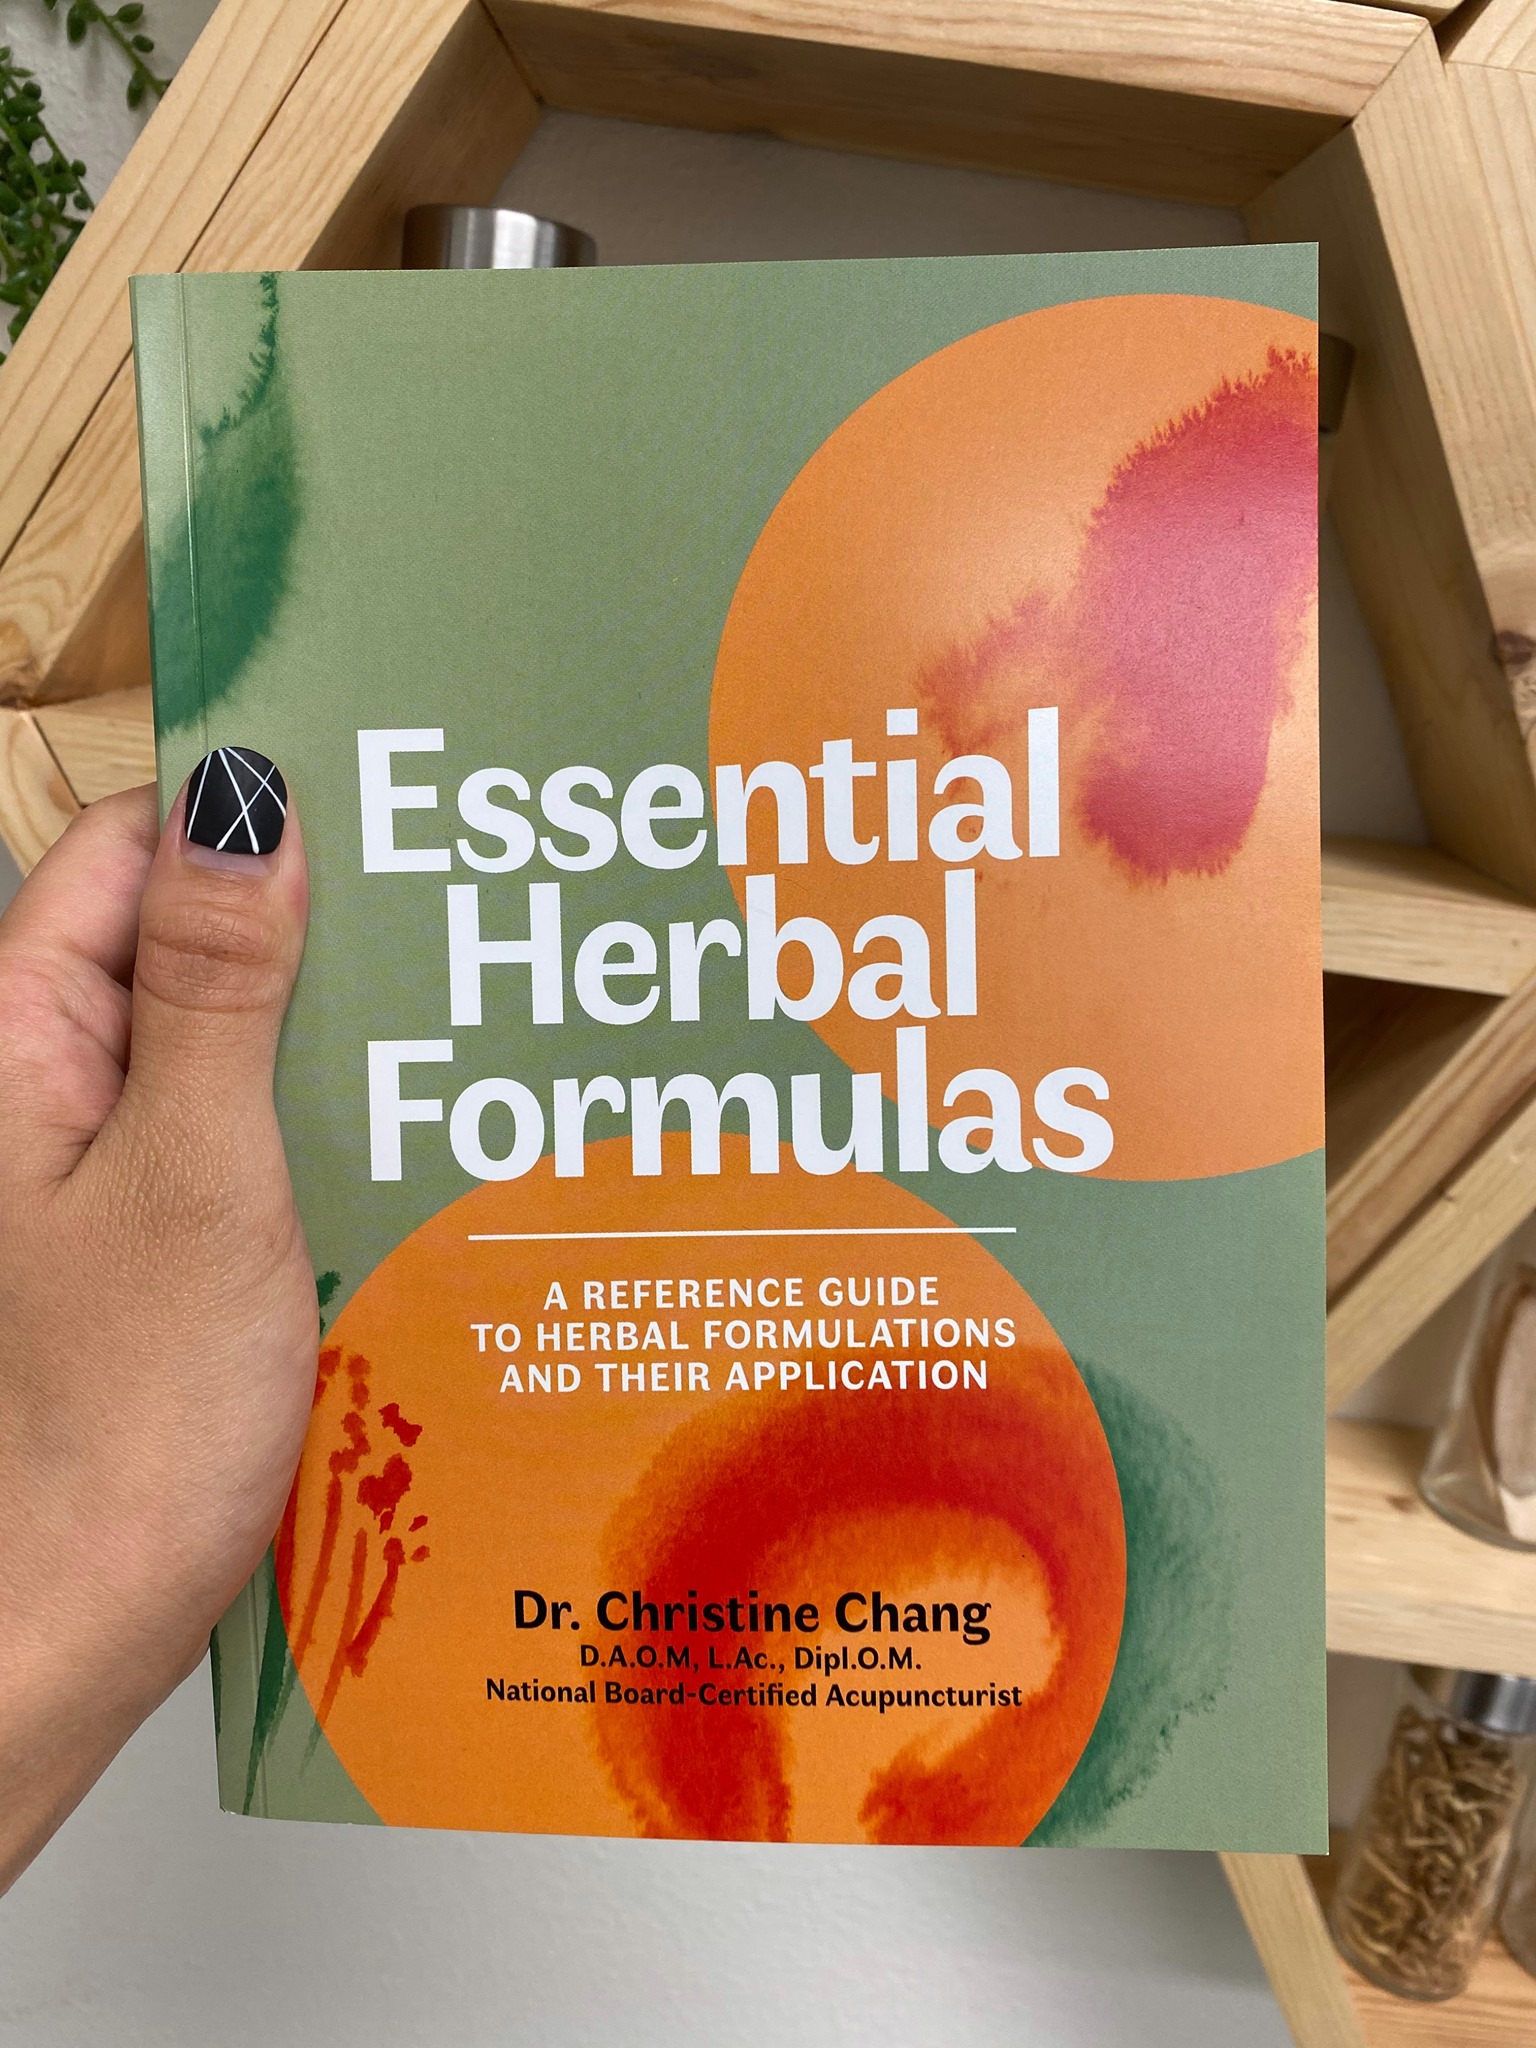 Essential Herbal Formulas by Dr. Christine Chang